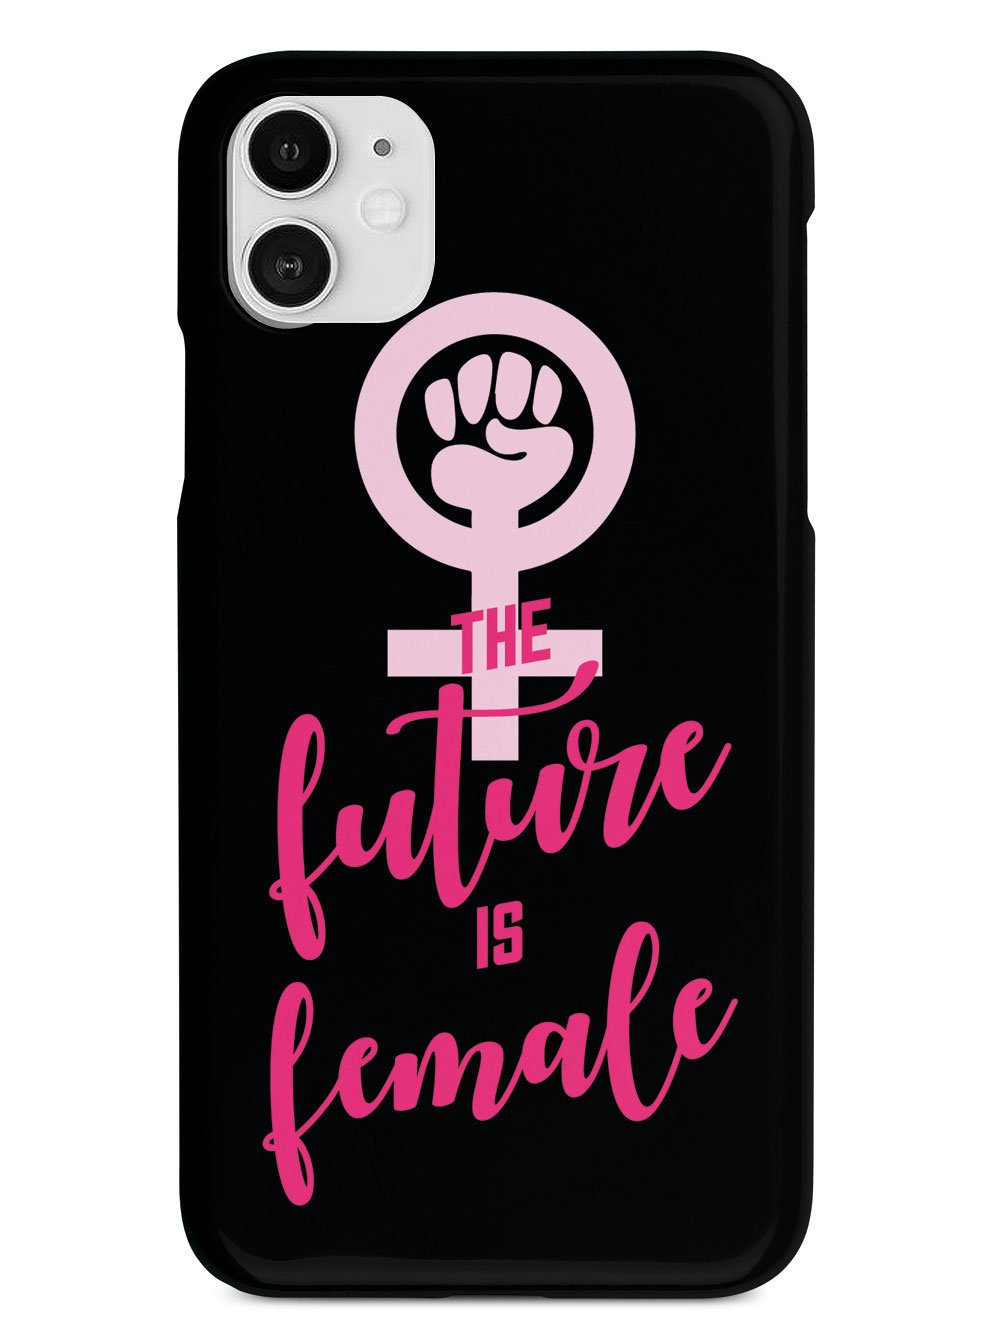 The Future is Female - Black Case - pipercleo.com